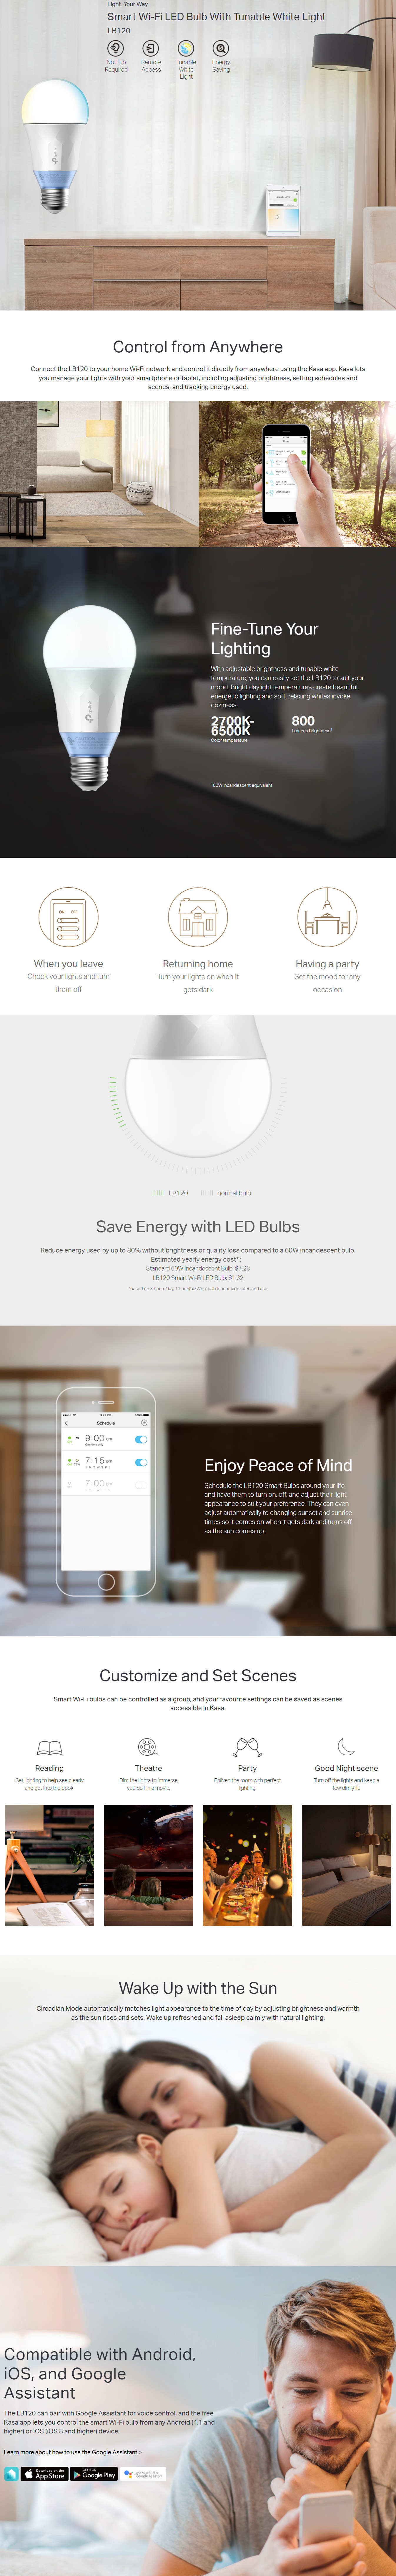 LED-Bulbs-TP-Link-LB120-Smart-Wi-Fi-LED-Bulb-with-Tunable-White-Light-1